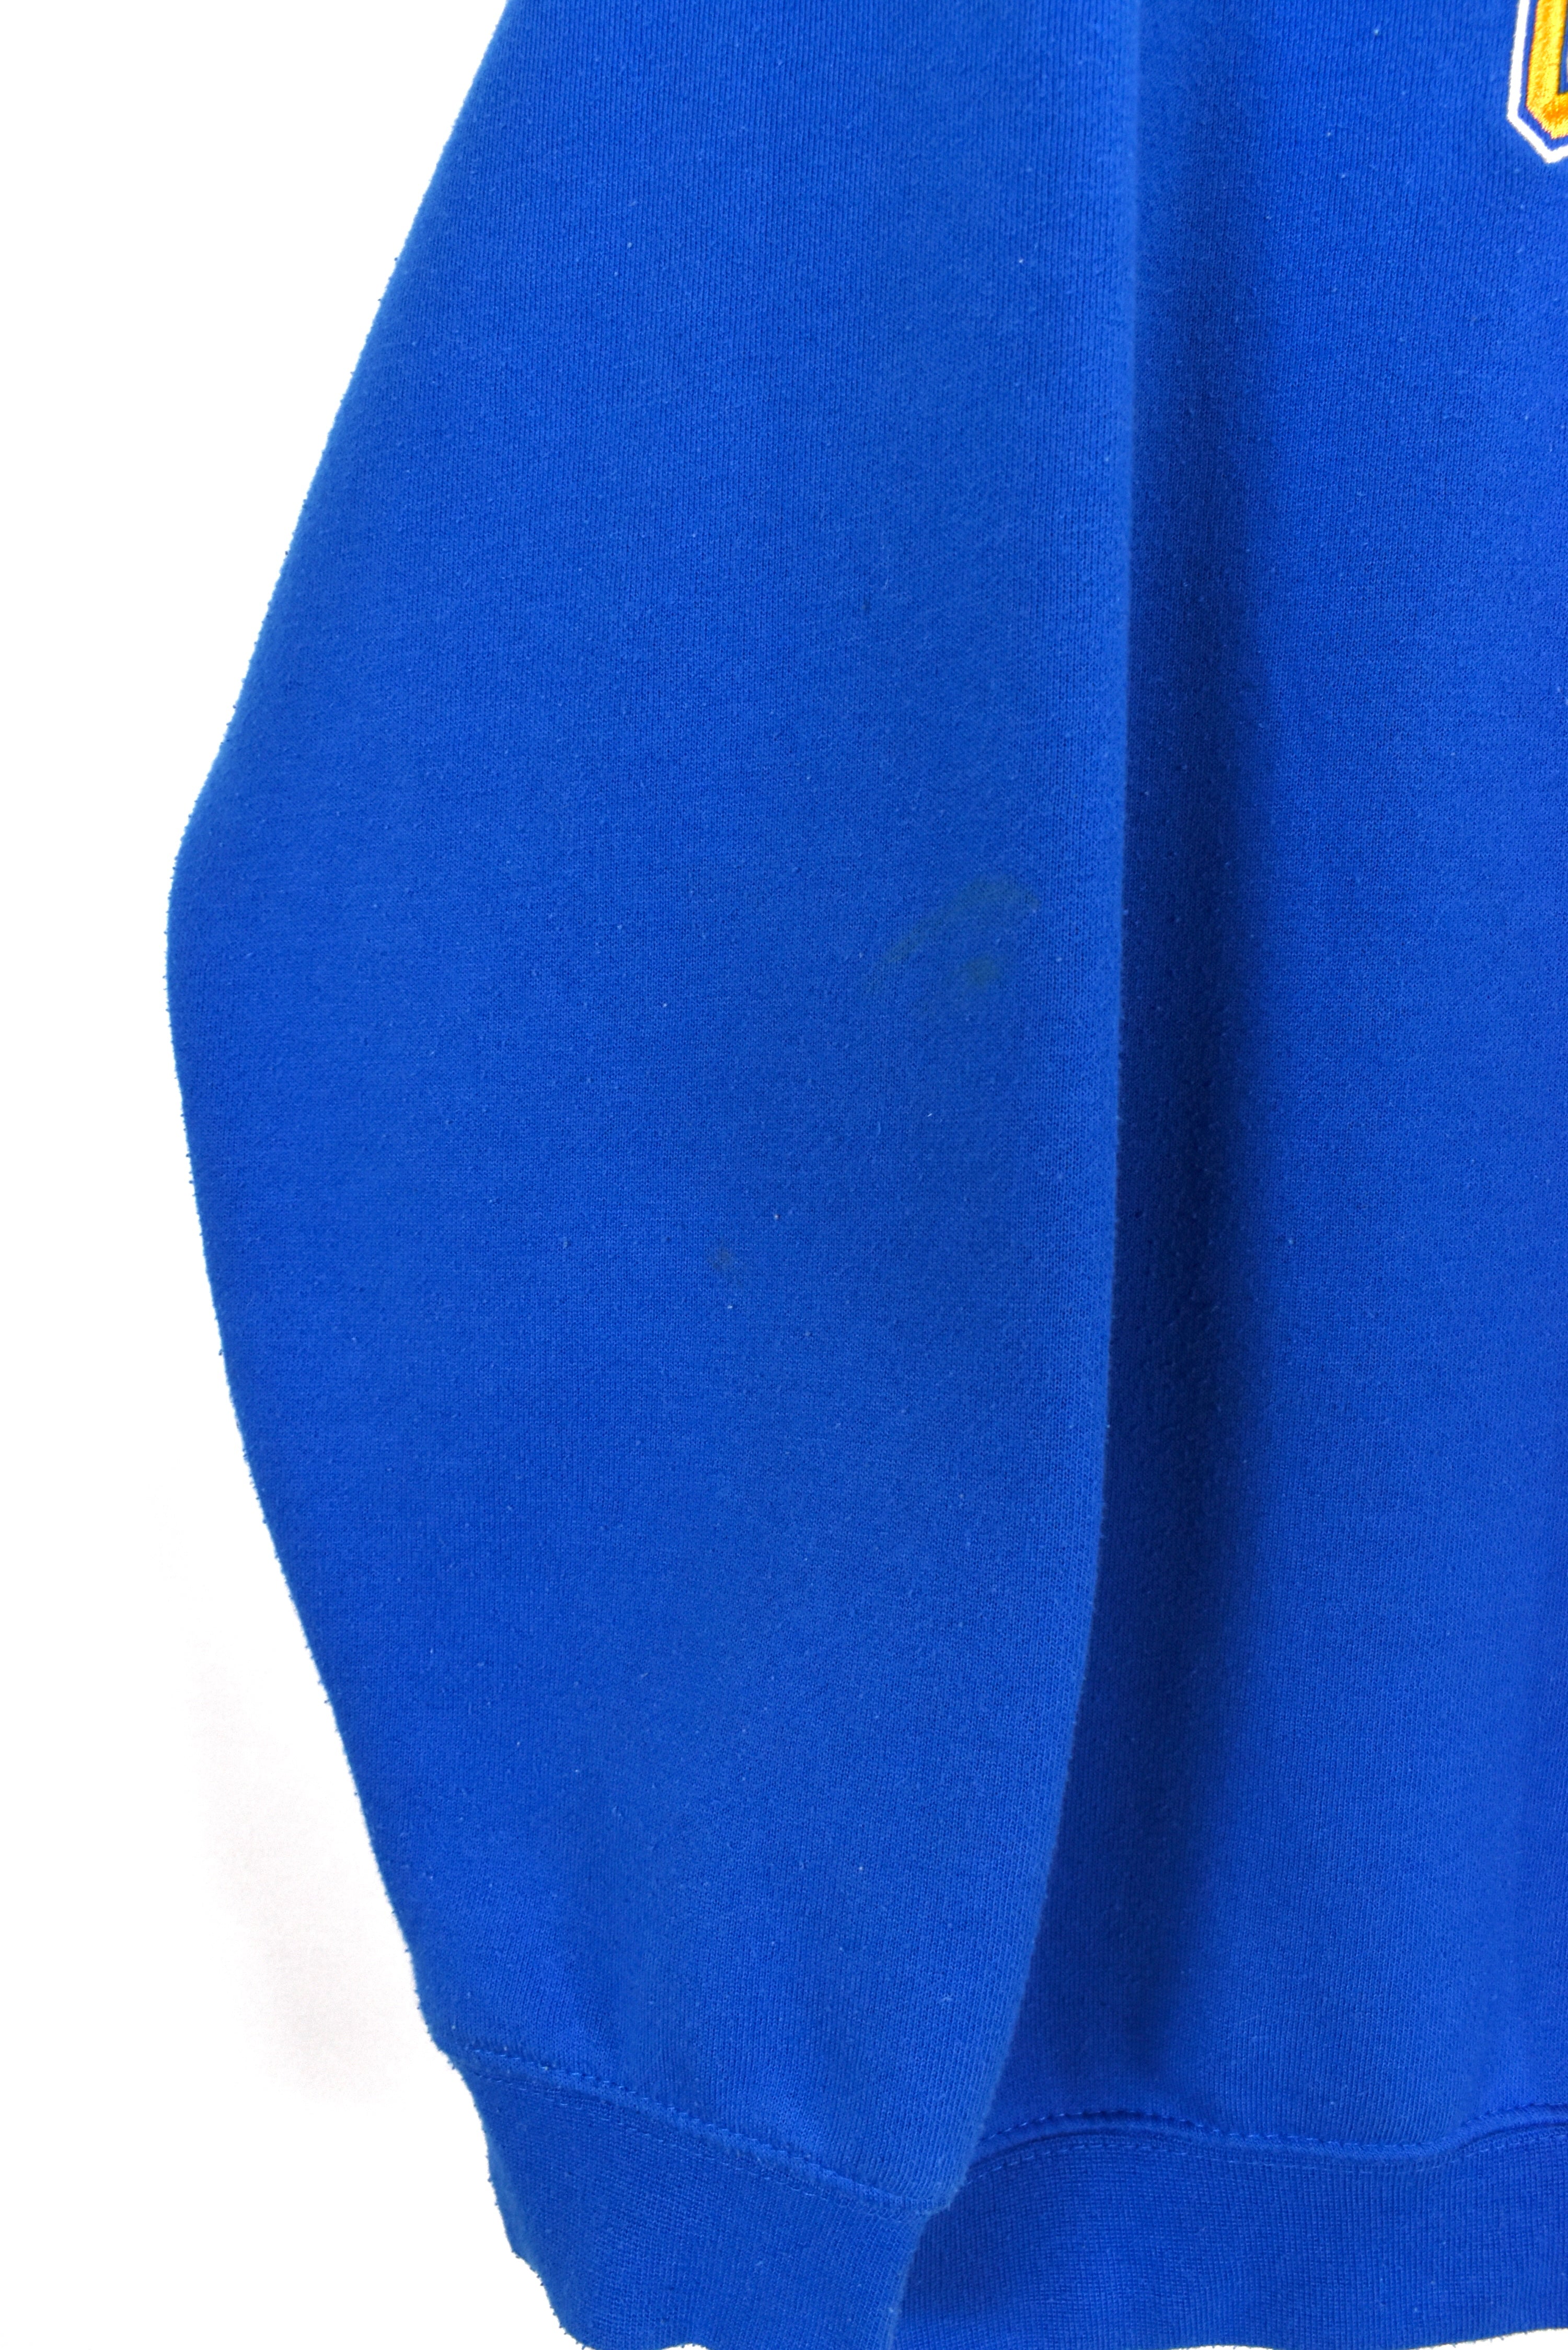 Modern Los Angeles Chargers sweatshirt, NFL blue embroidered crewneck - M/L